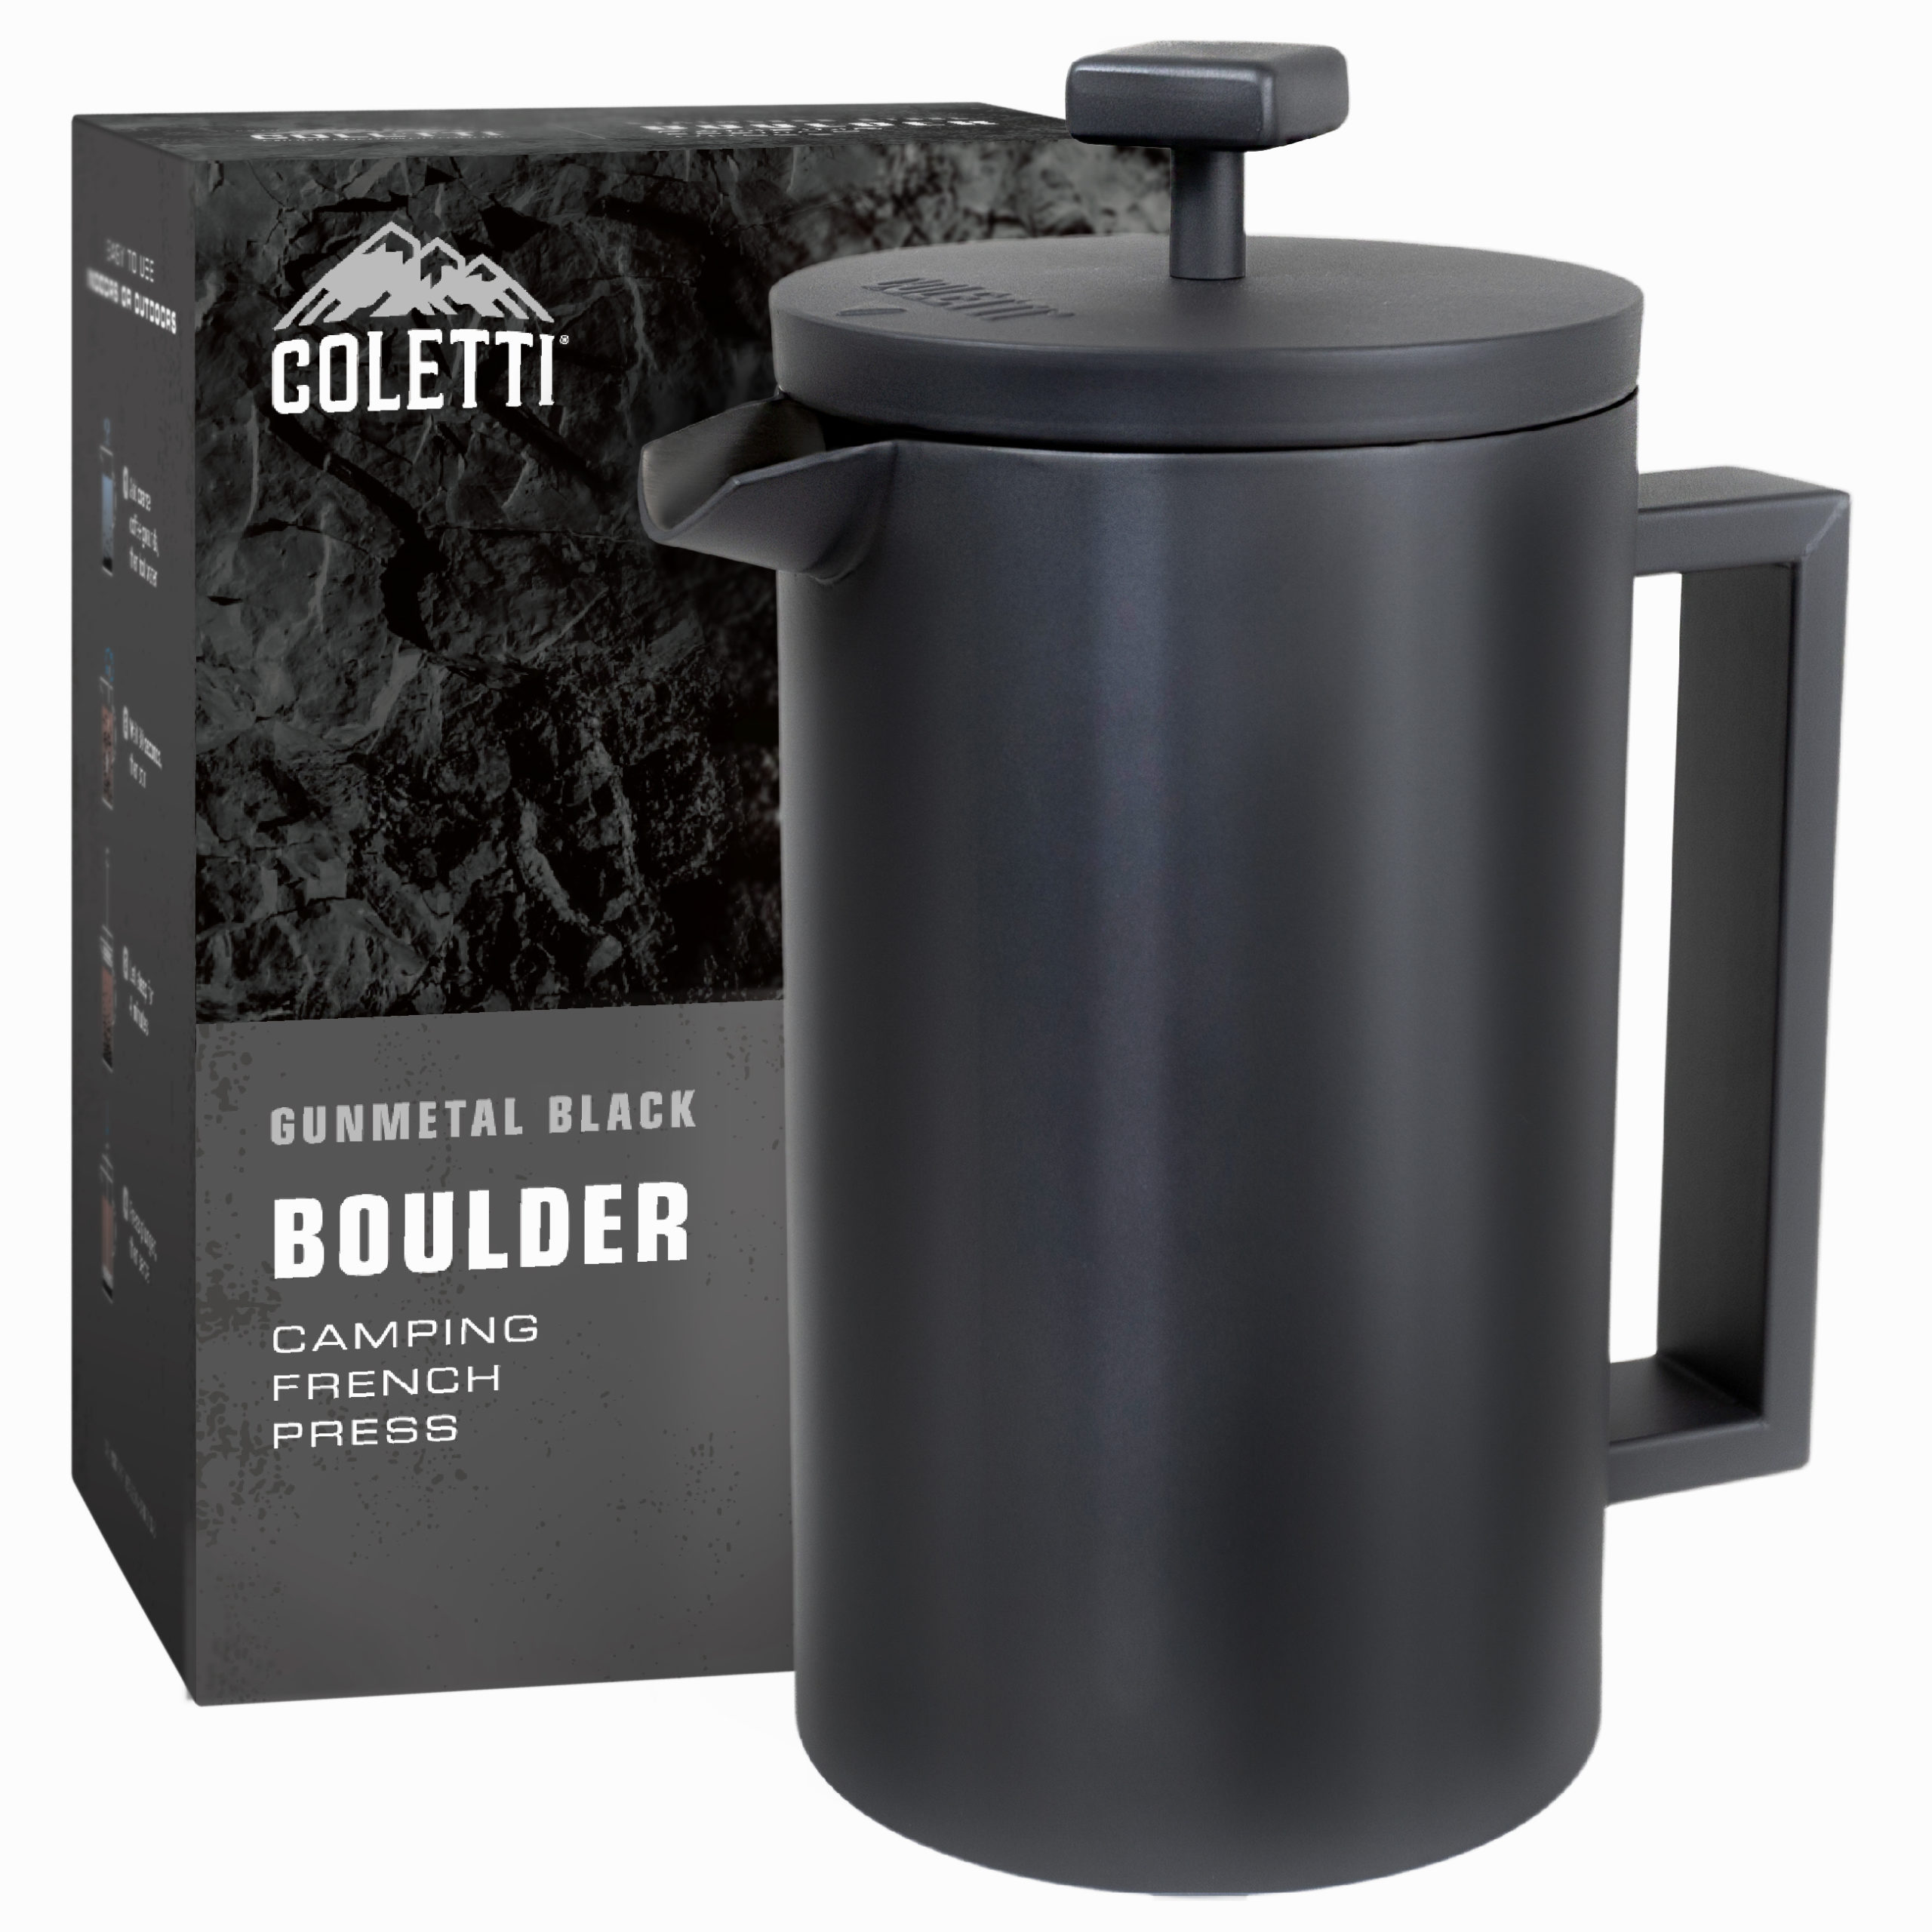 Boulder Camping French Press - Gunmetal Black – COLETTI Coffee